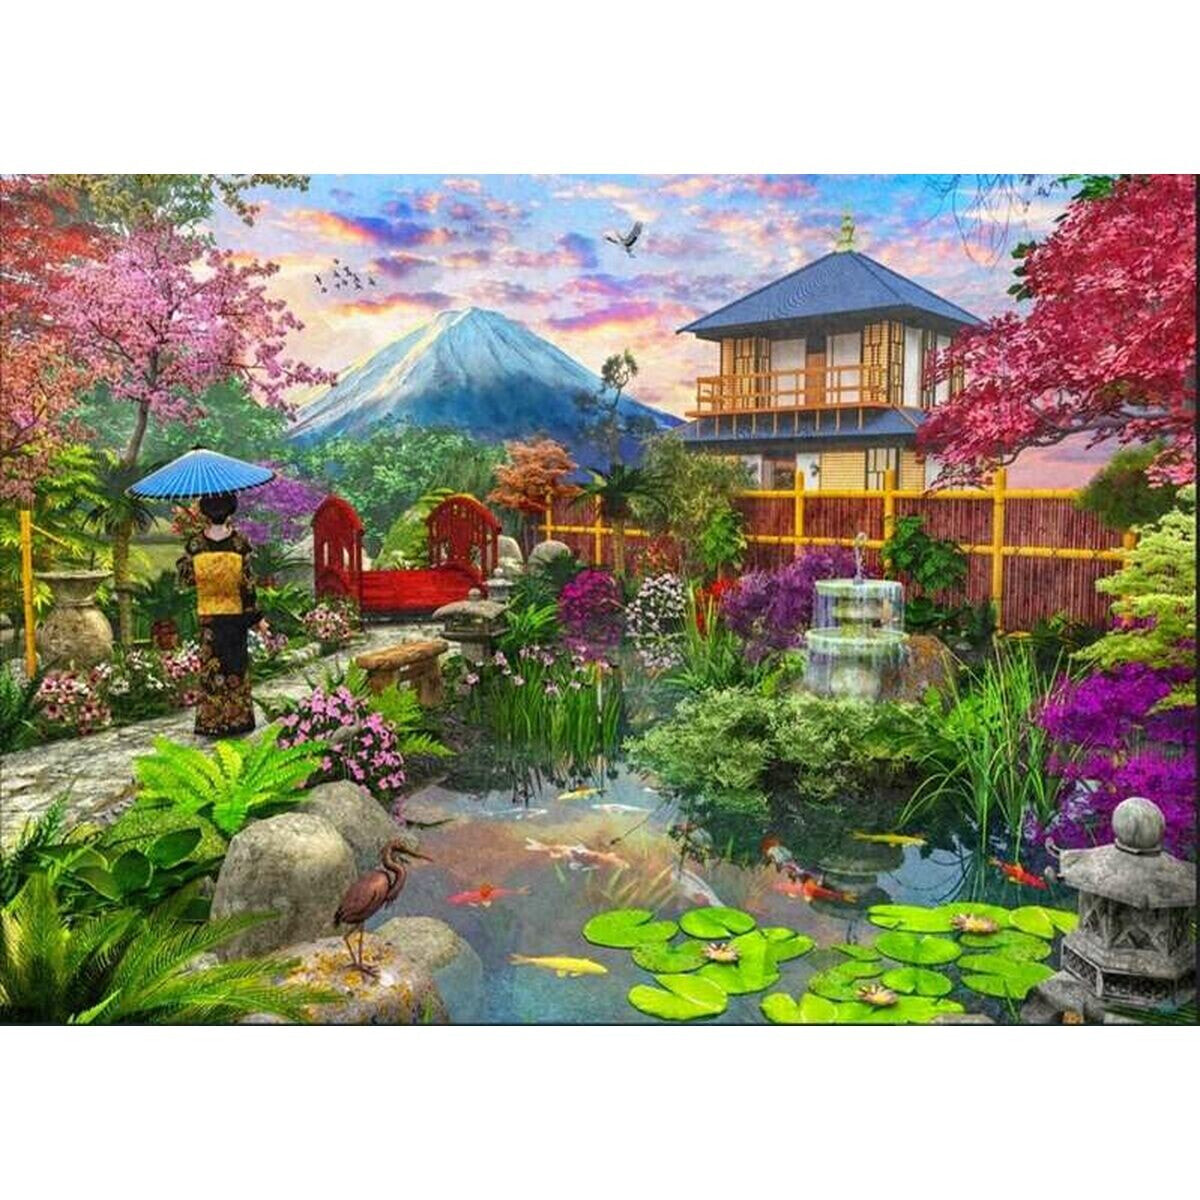 Puzzle Educa Garden Japanese 1500 Pieces